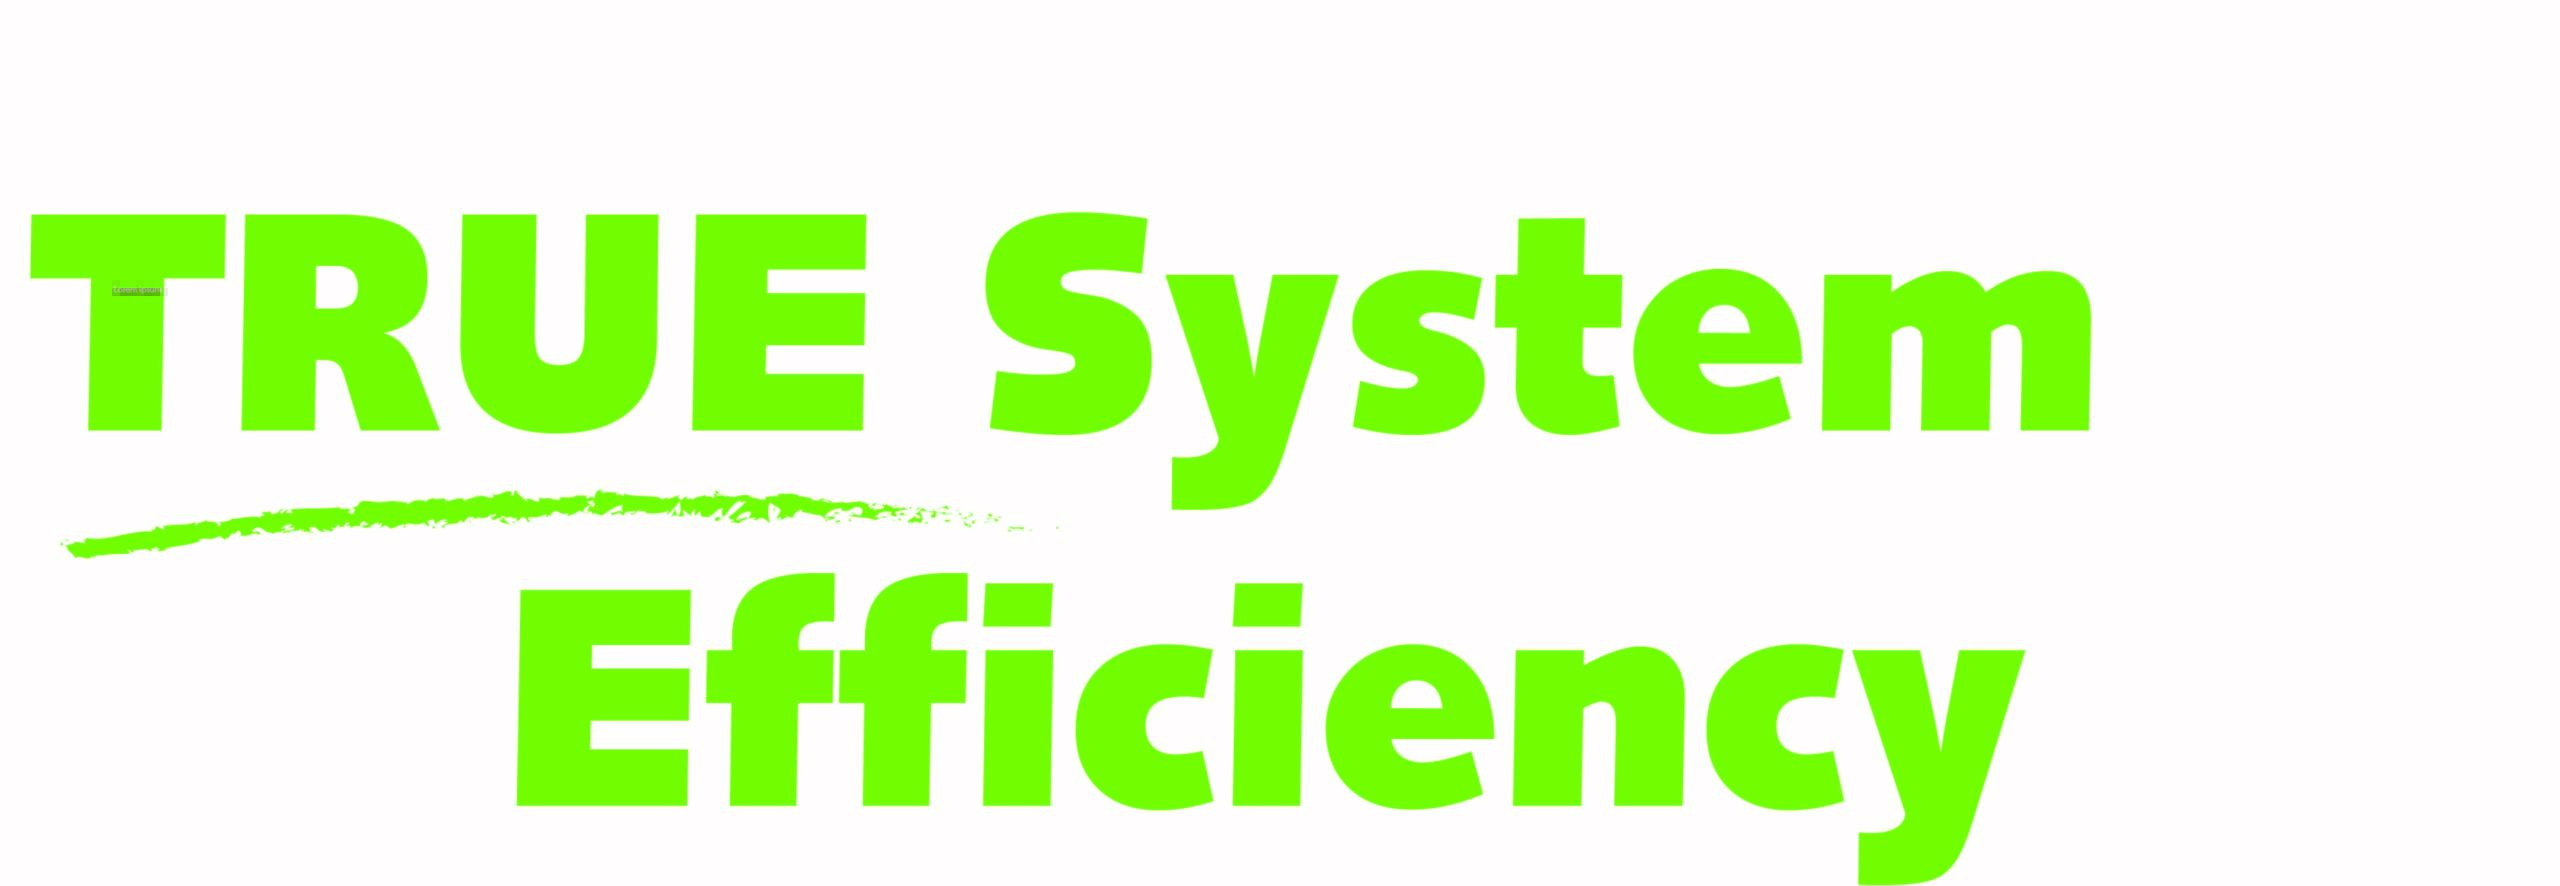 True System Efficiency Tagline